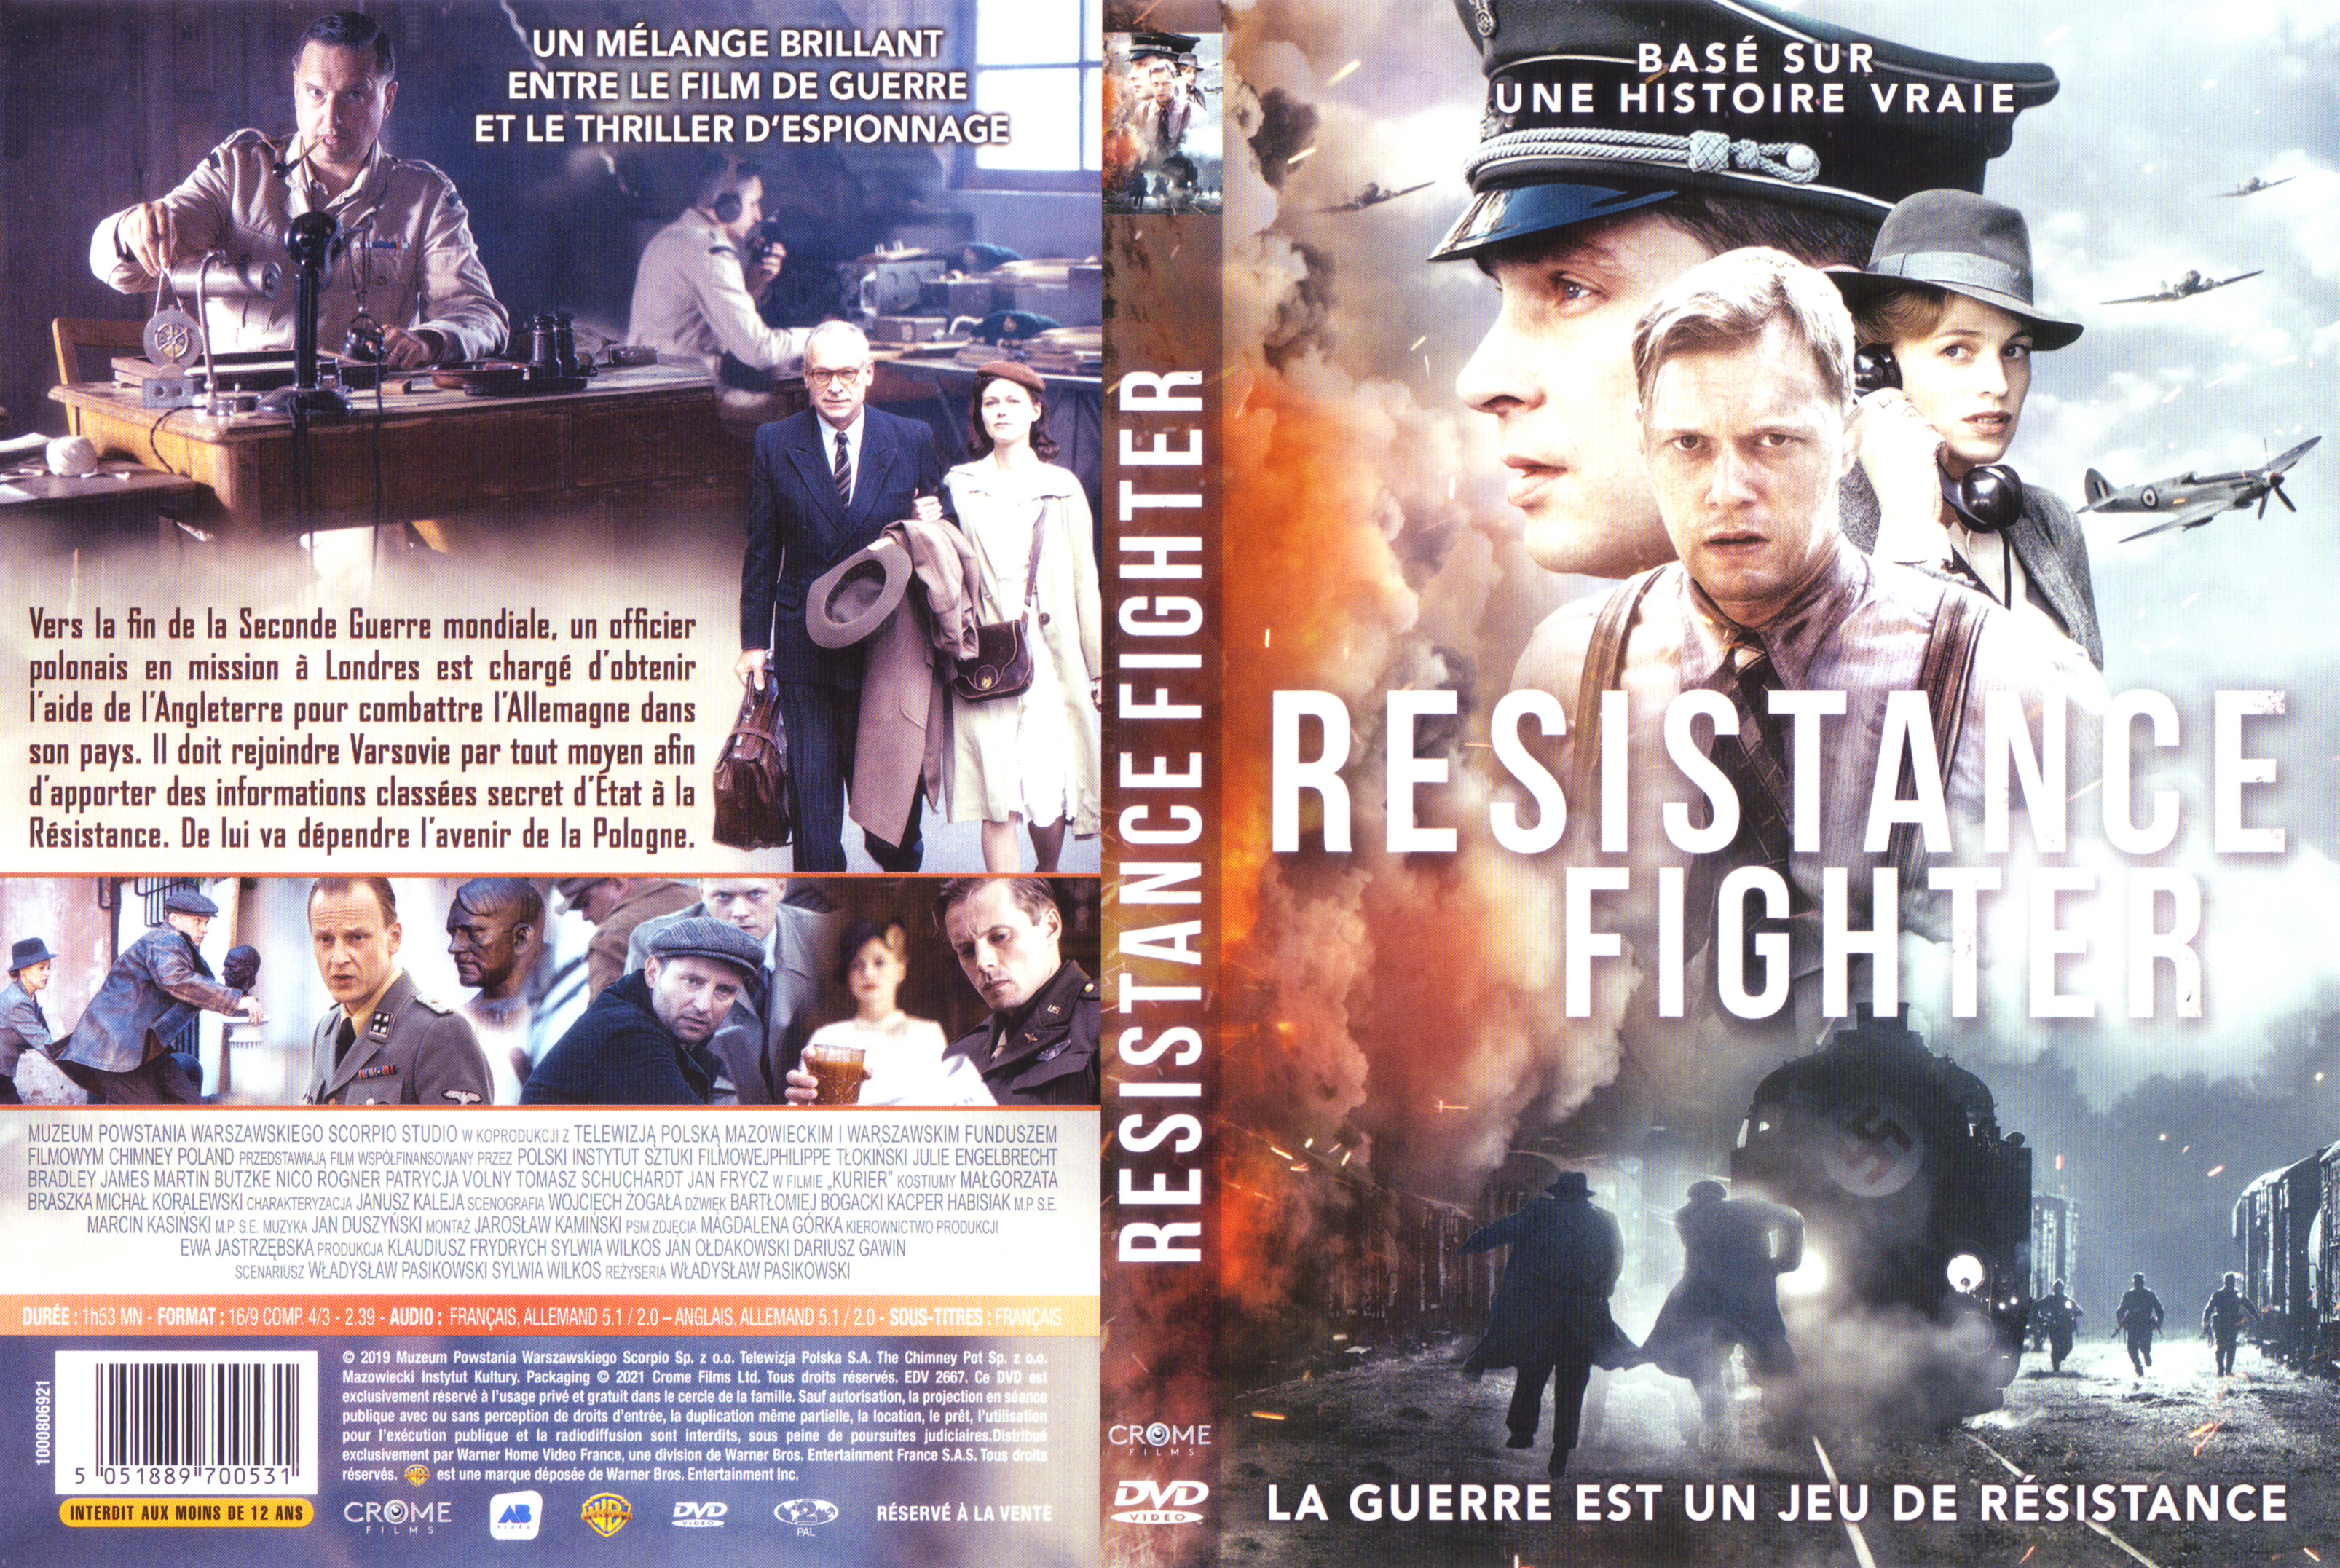 Jaquette DVD Resistance fighter